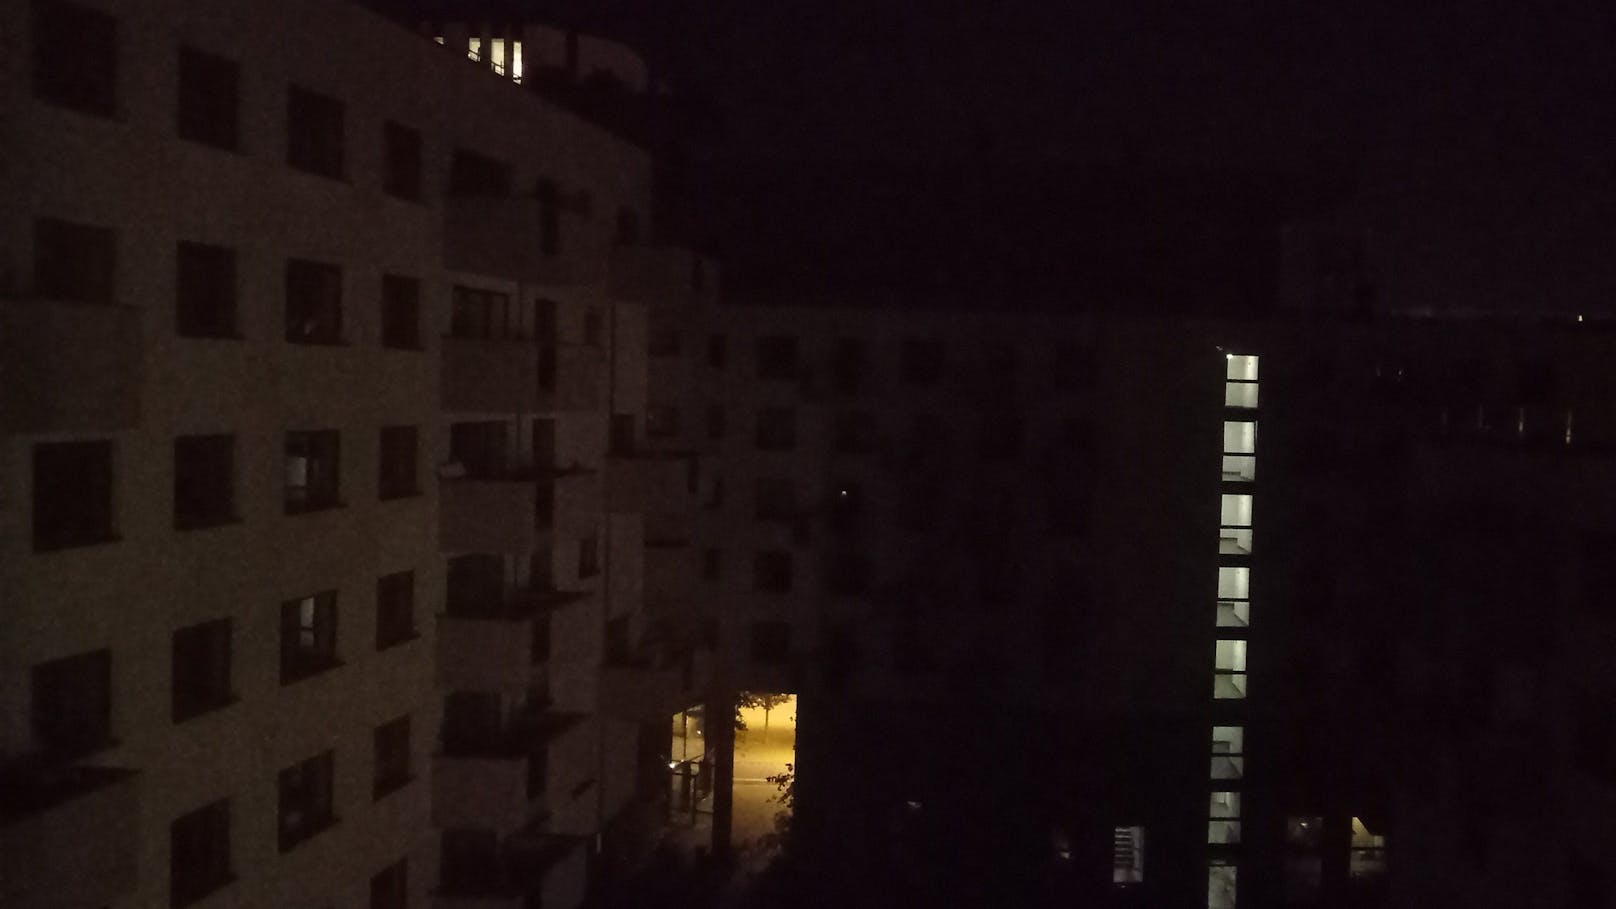 Stromausfall in Wien – hier blieb es stockfinster